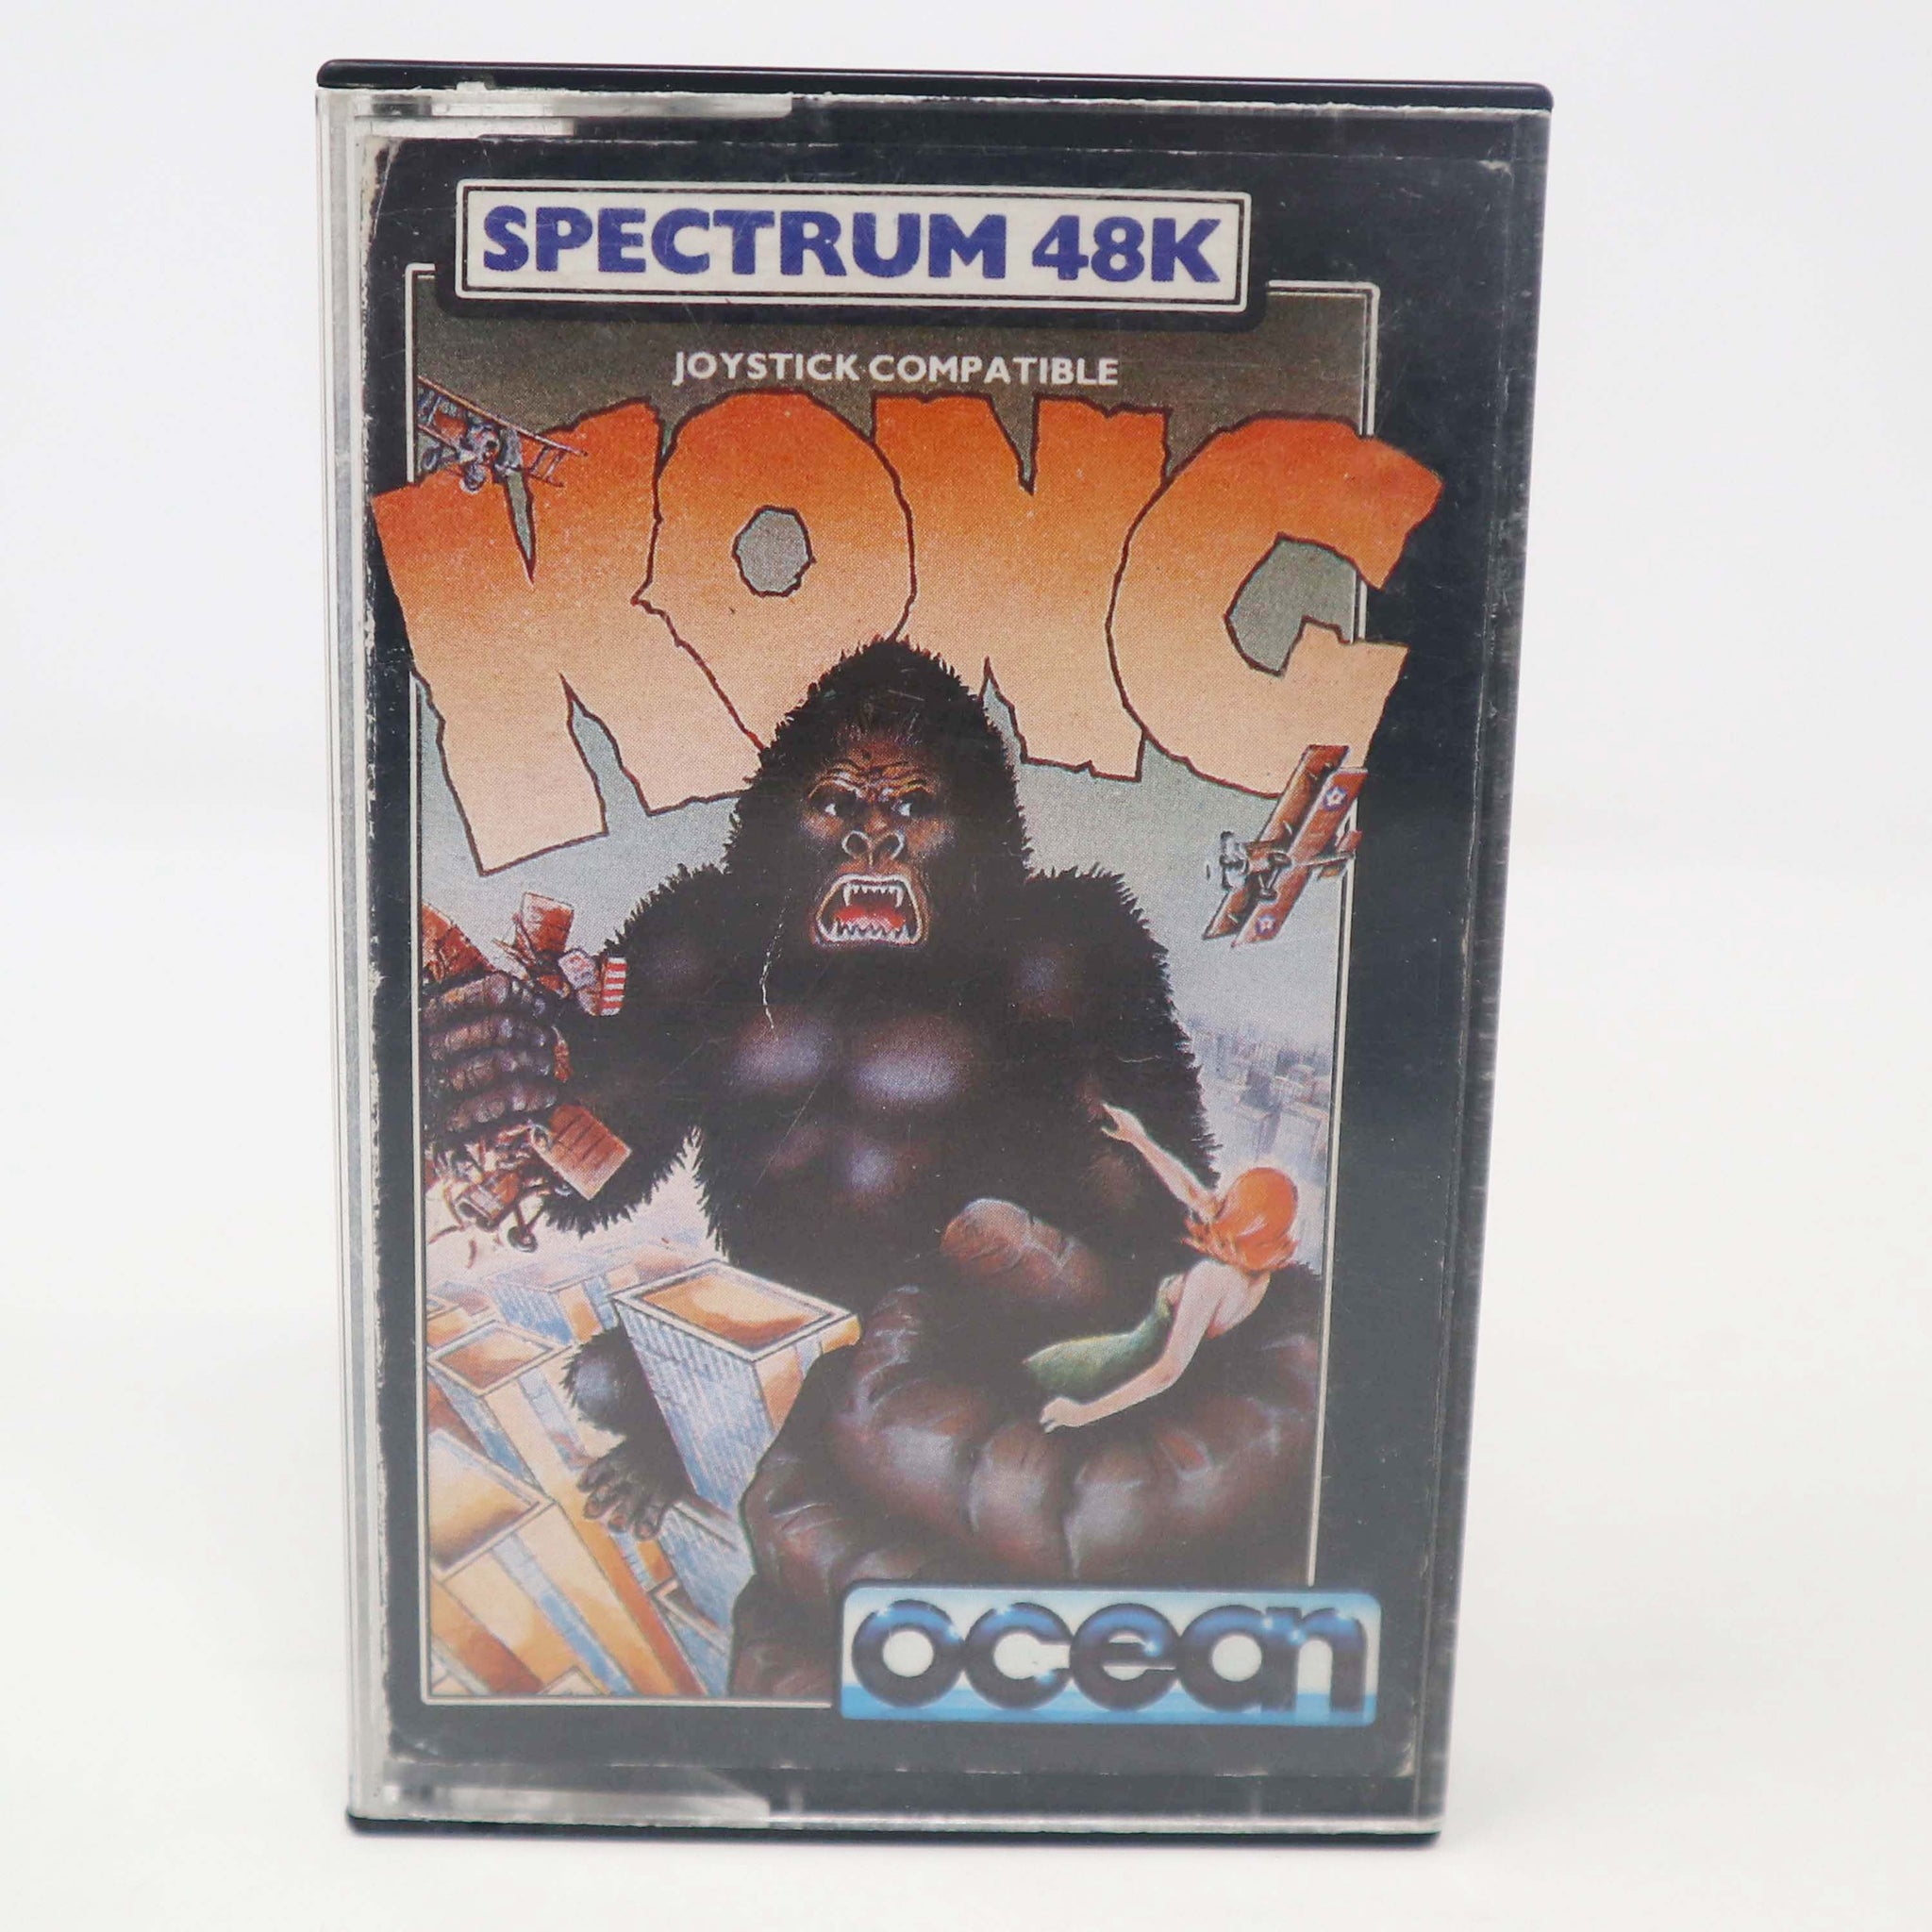 Vintage 1983 80s Spectrum 48K Kong Cassette Tape Video Game